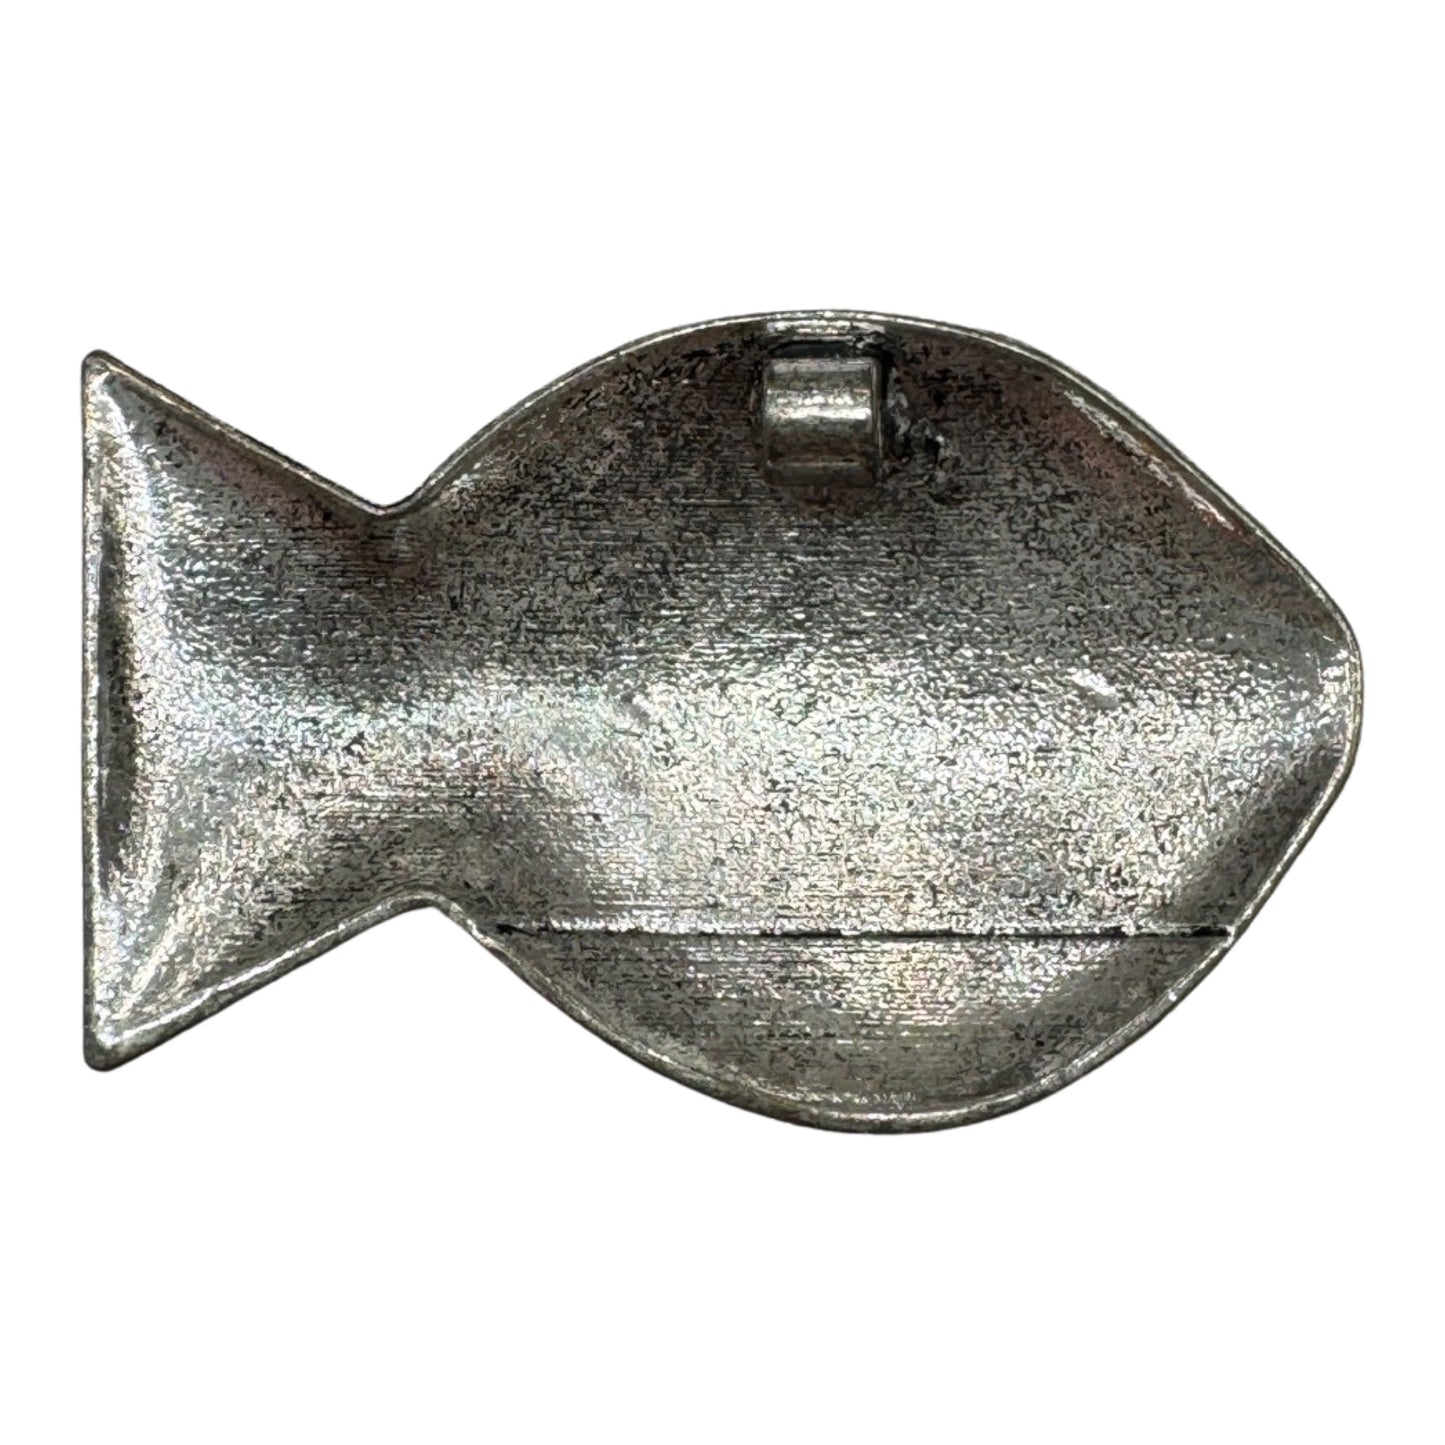 41mm x 31mm Fish Pendant